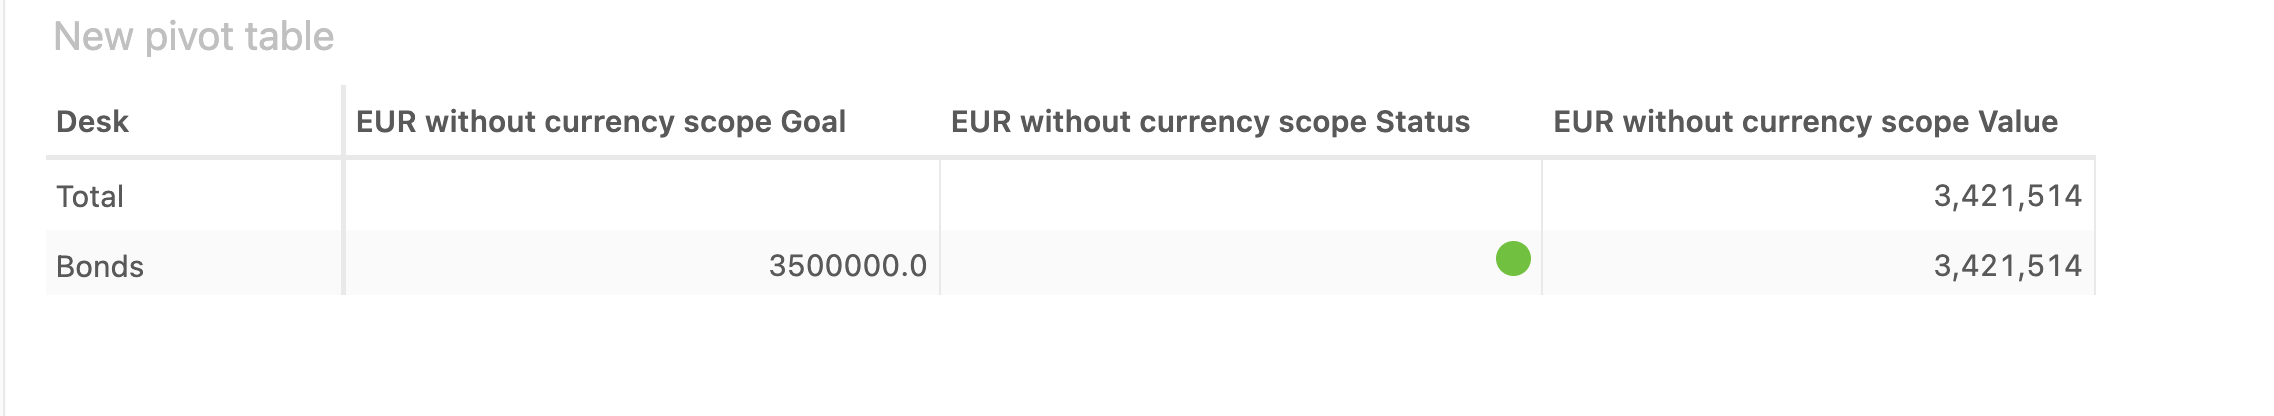 EUR KPI without scope